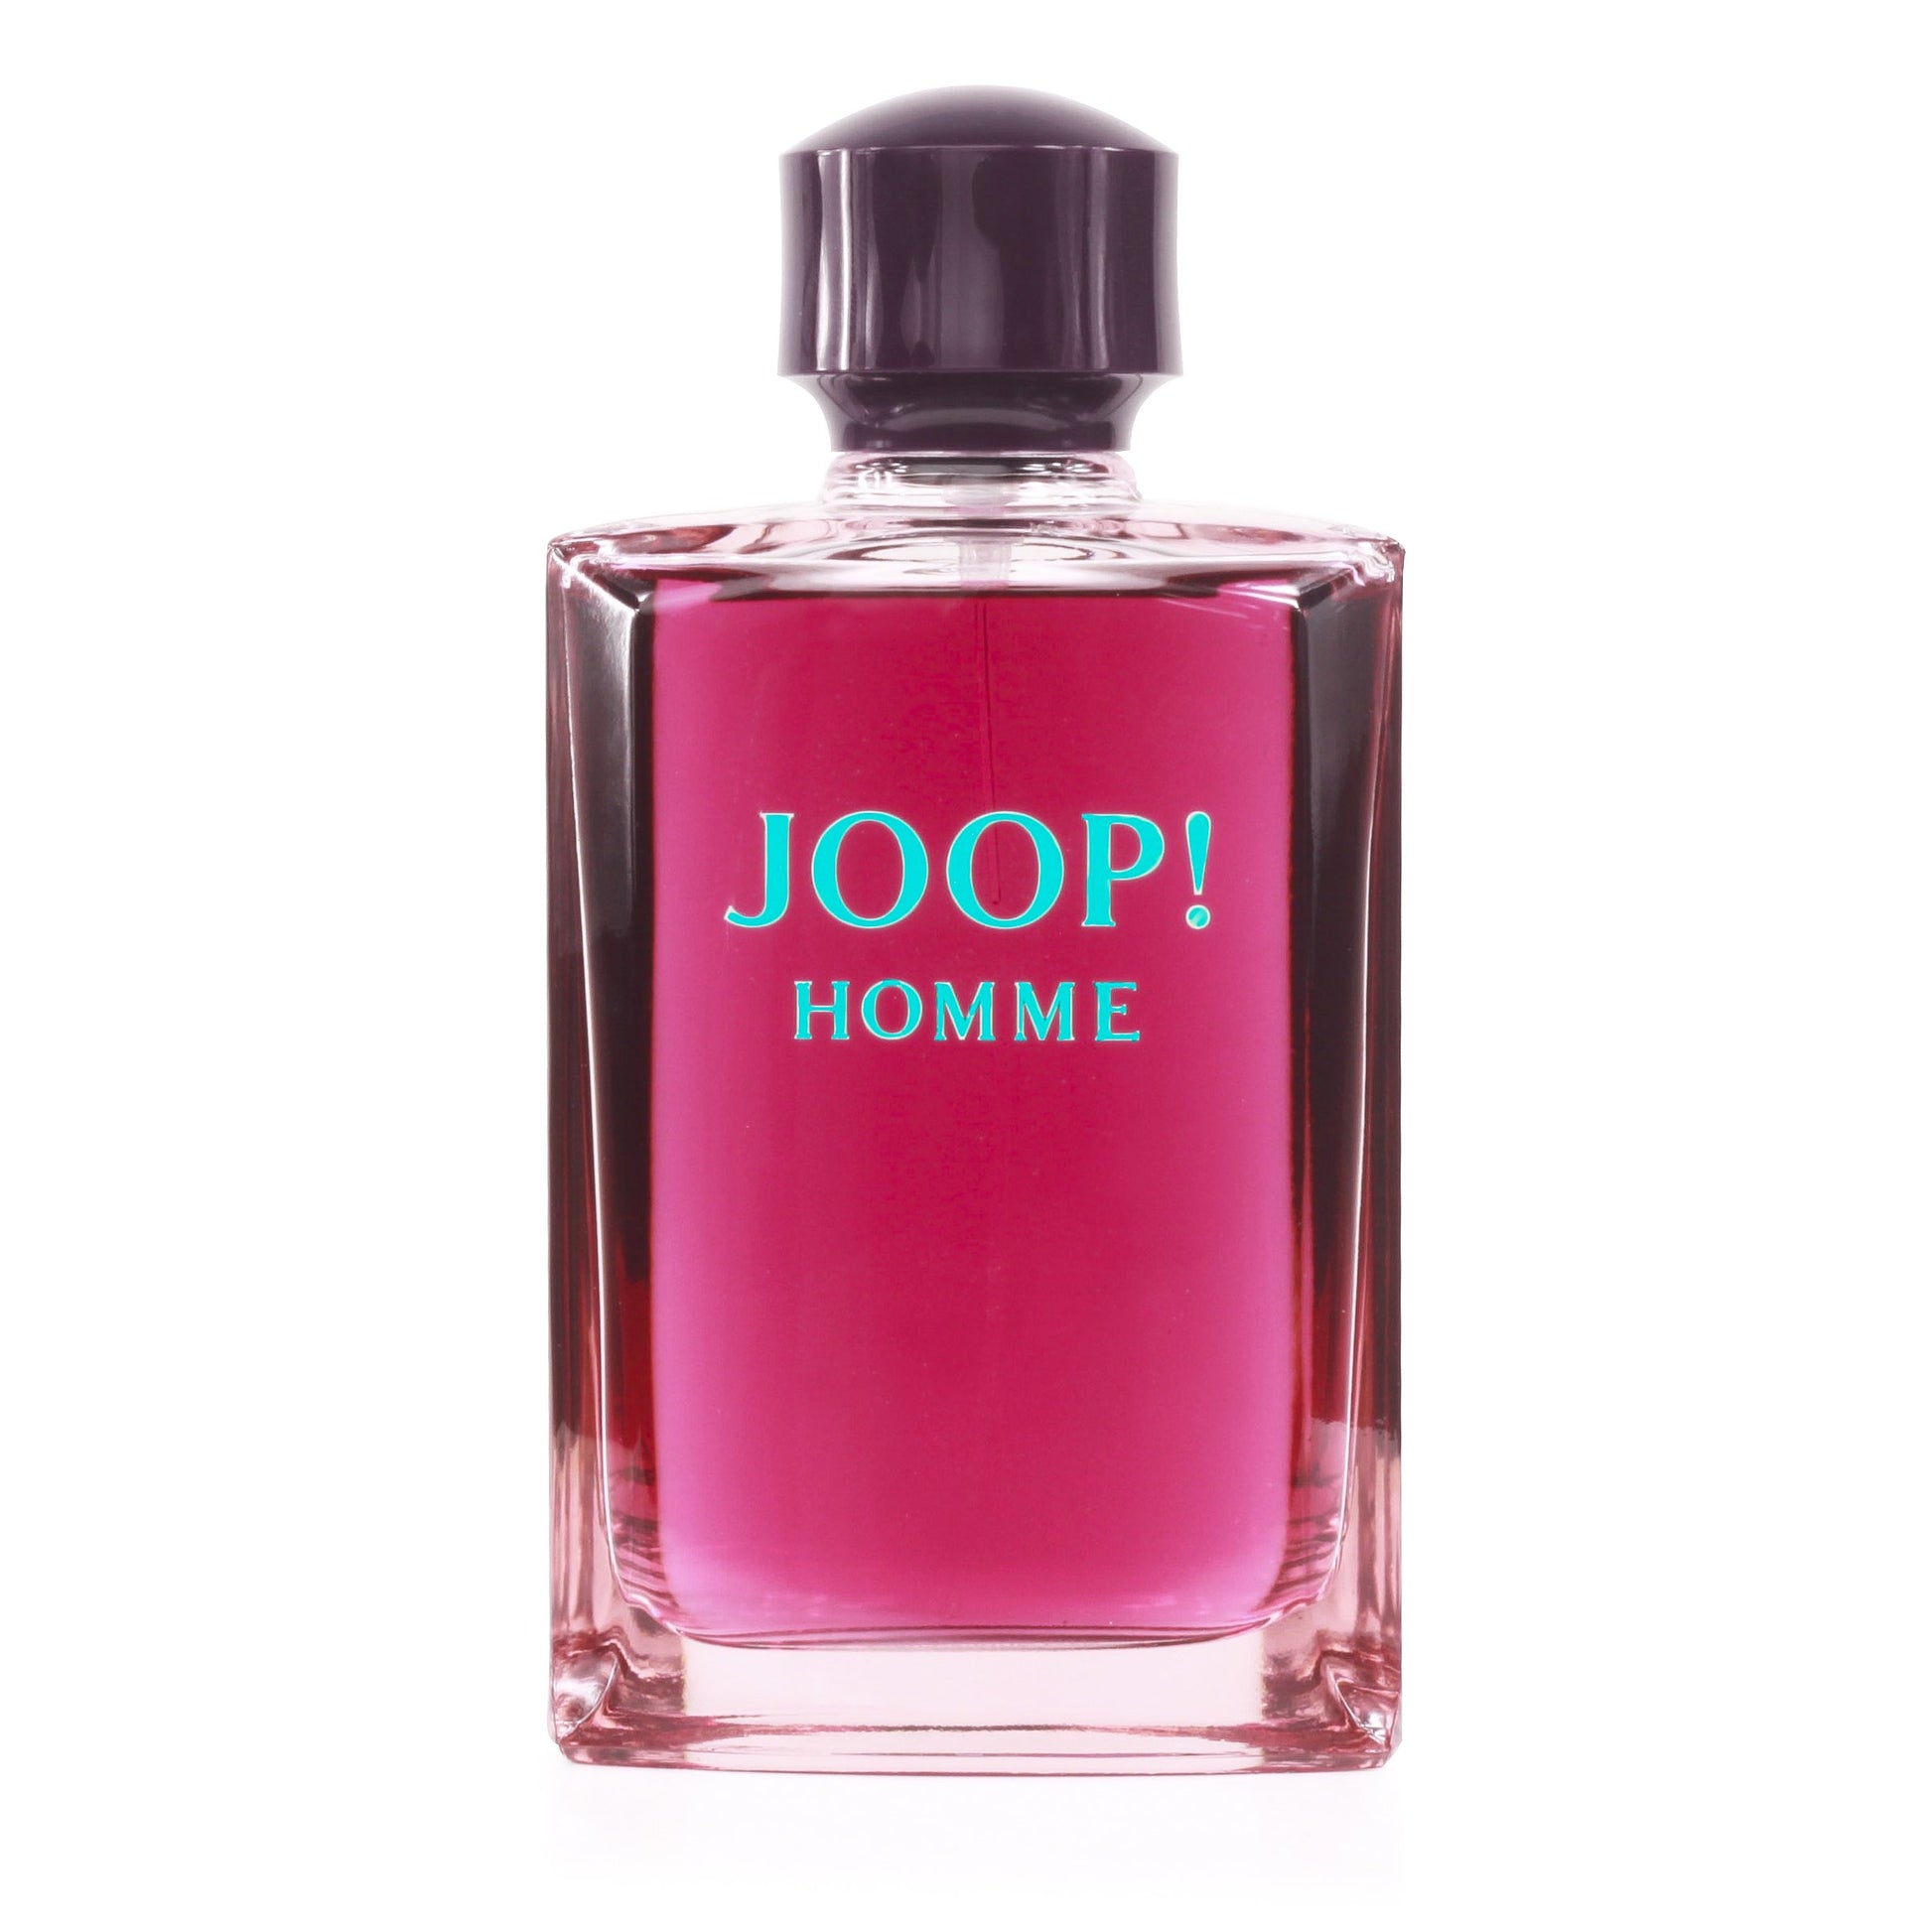 Joop! Homme Eau de Toilette Spray for Men by Joop!, Product image 6